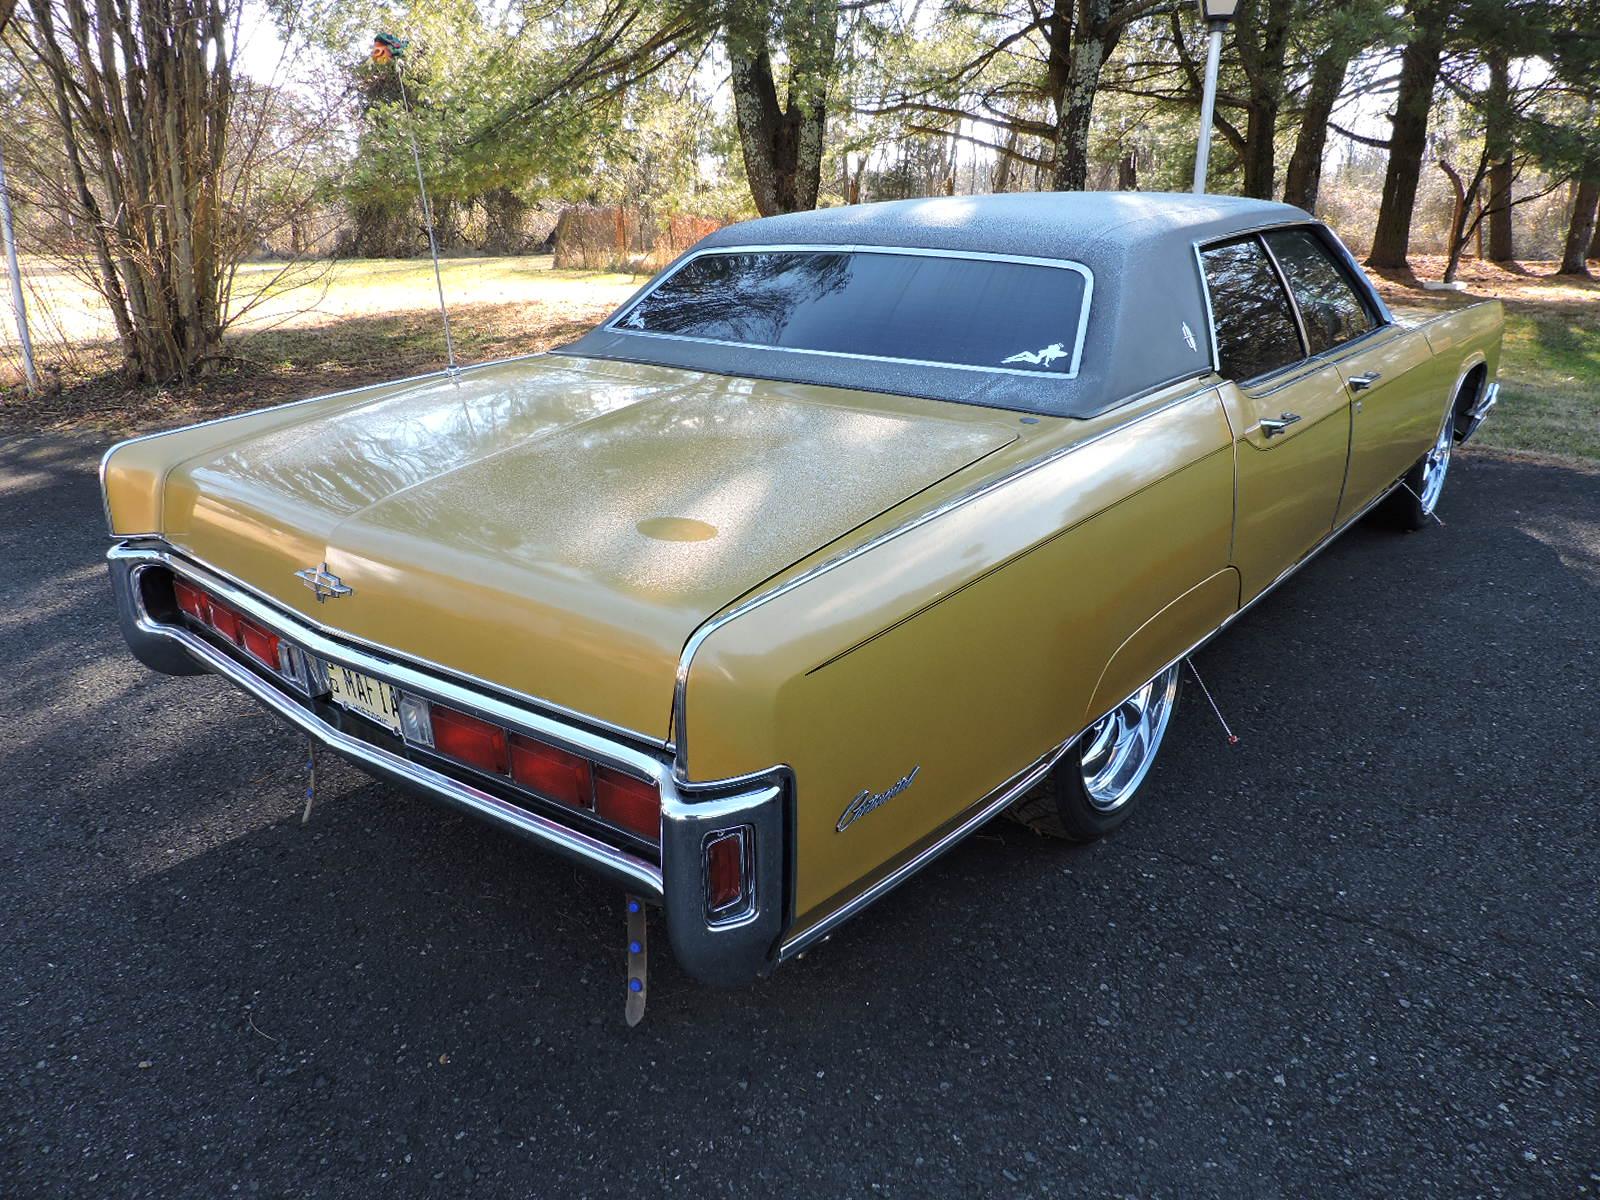 1972 Lincoln Continental - 460 V8 - Clean - Starts Runs Drives Stops - New Battery